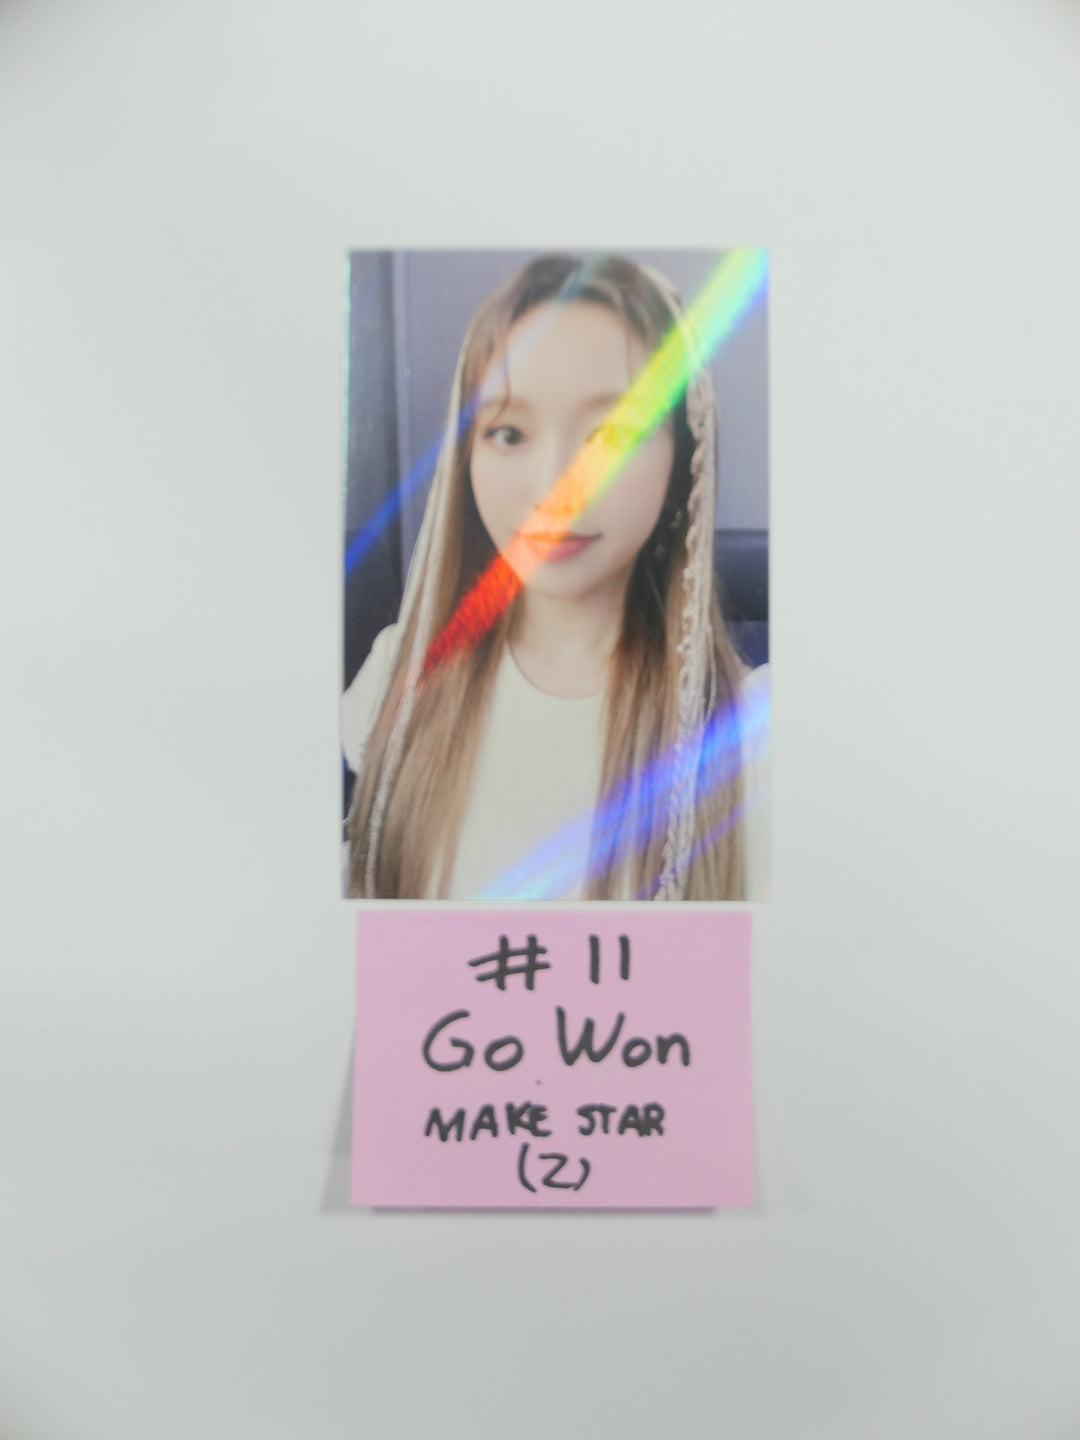 Loona '&' - Makestar Fan Sign Event Hologram Photocard